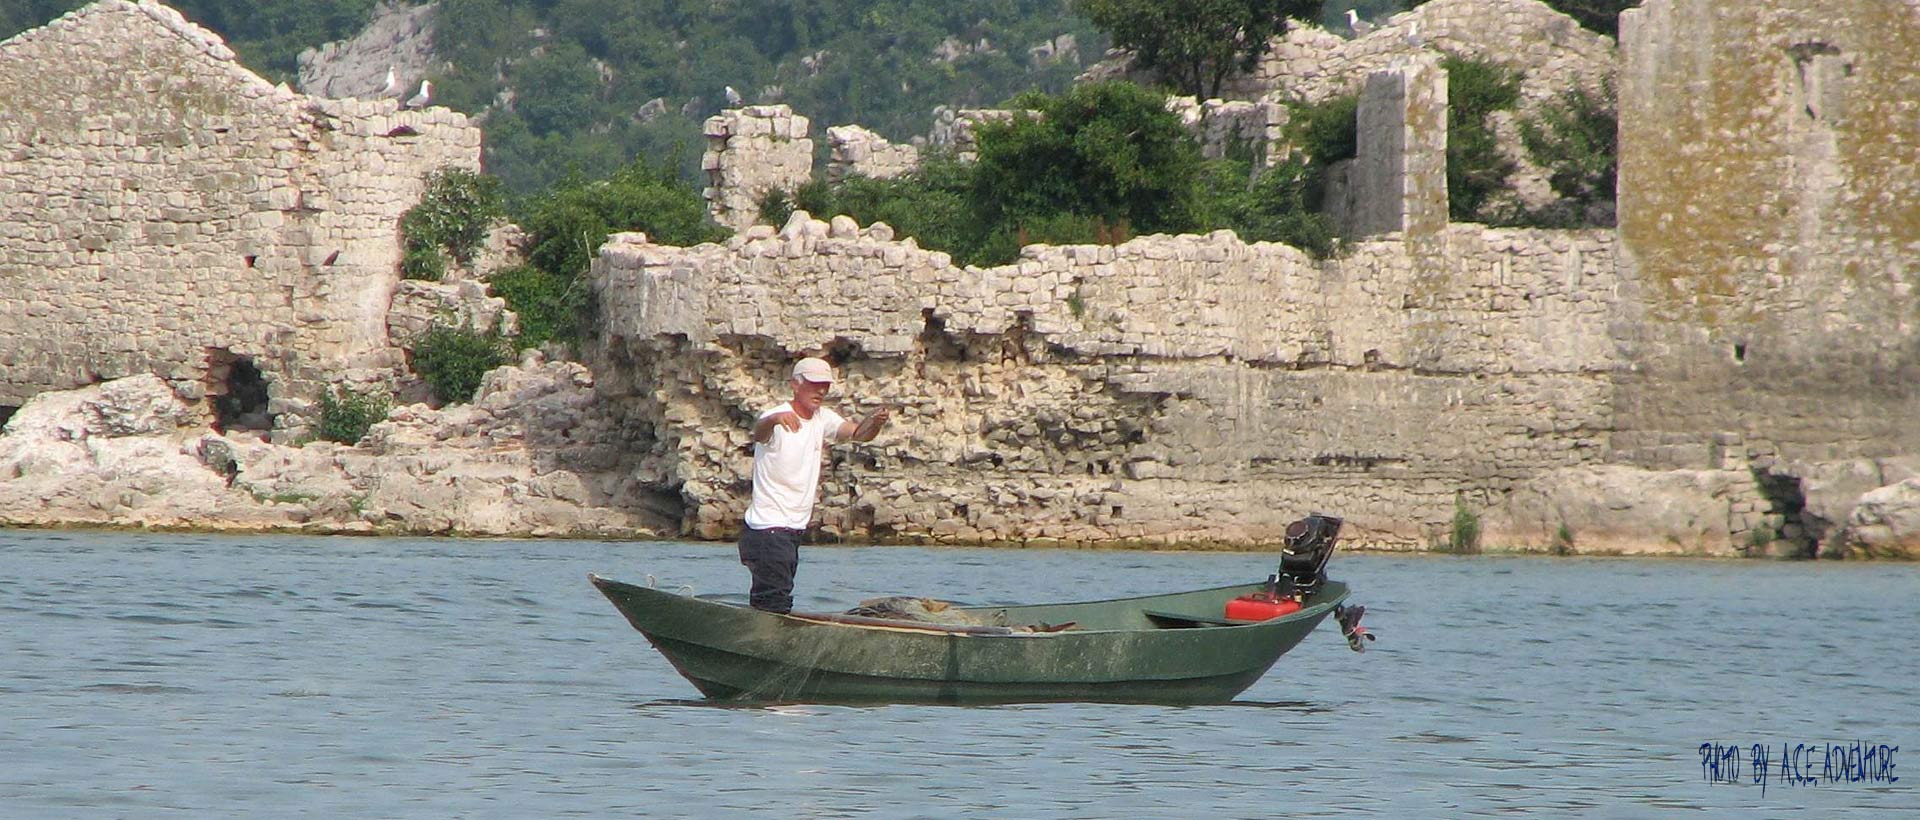 Luxury Family Holiday in Montenegro - Fishing on Skadar lake